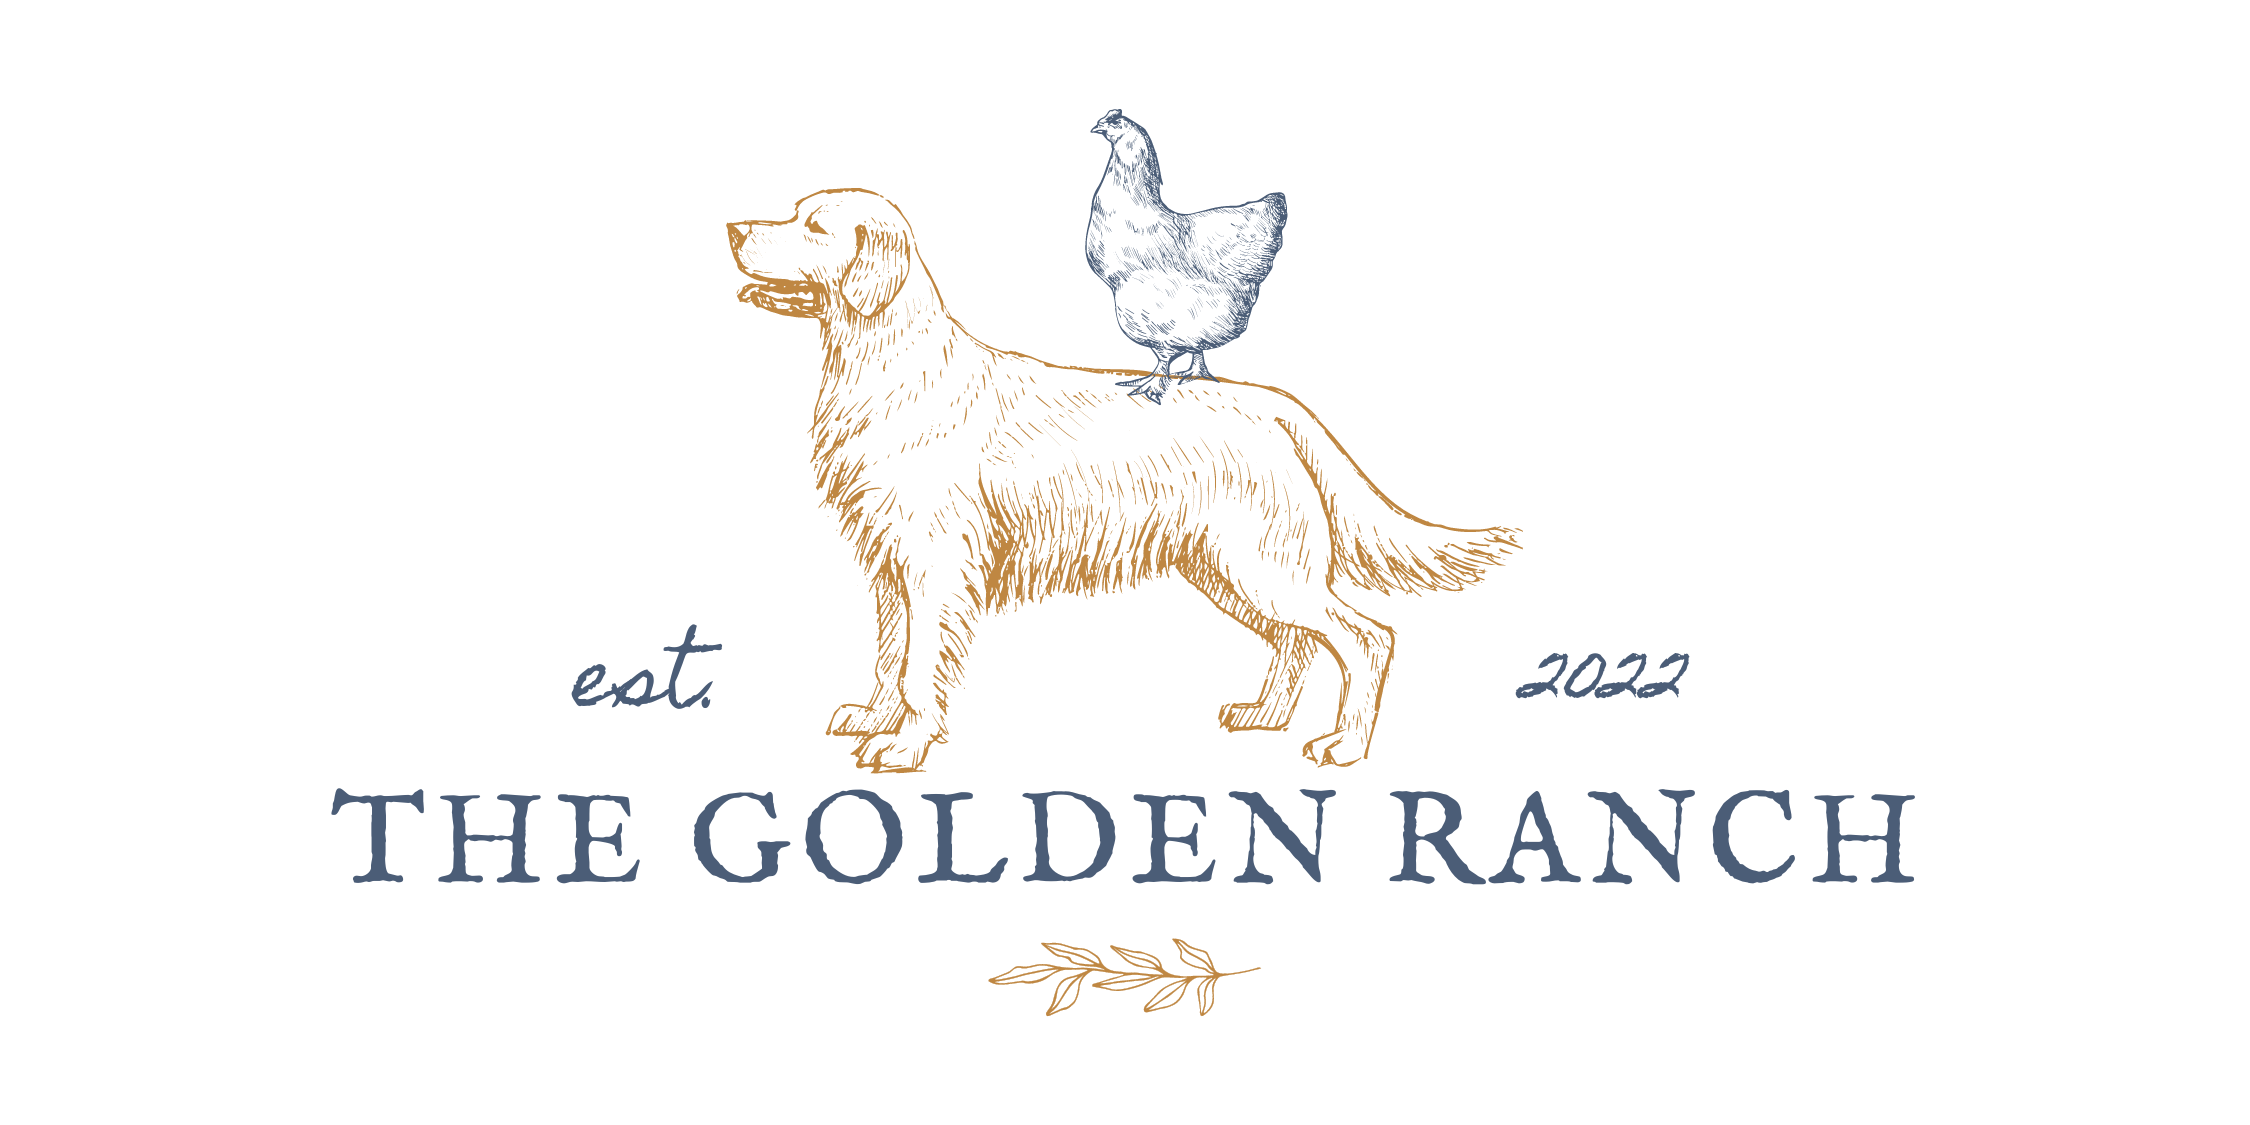 The Golden Ranch